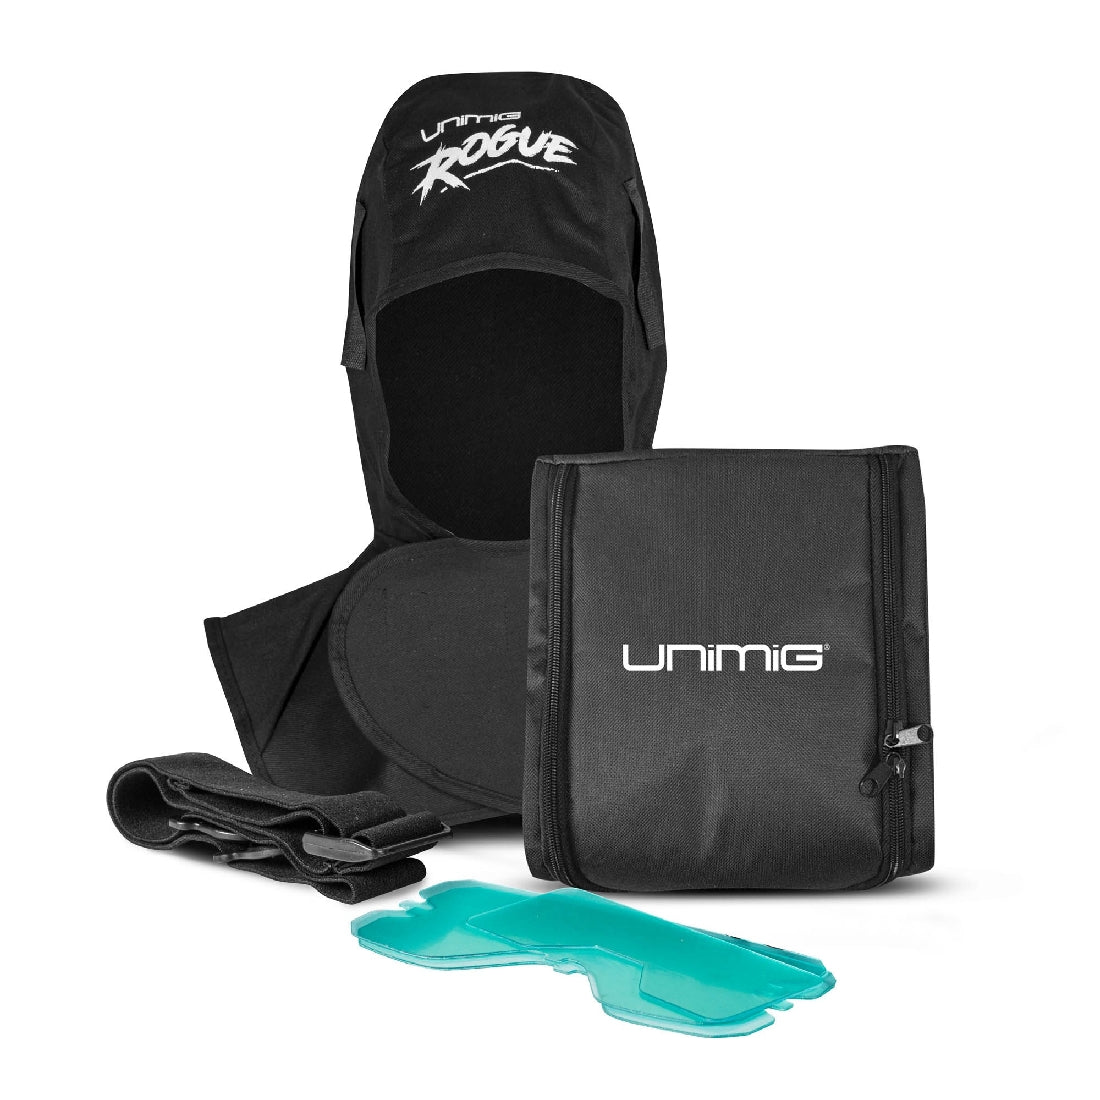 Unimig Auto Darkening Goggle Kit